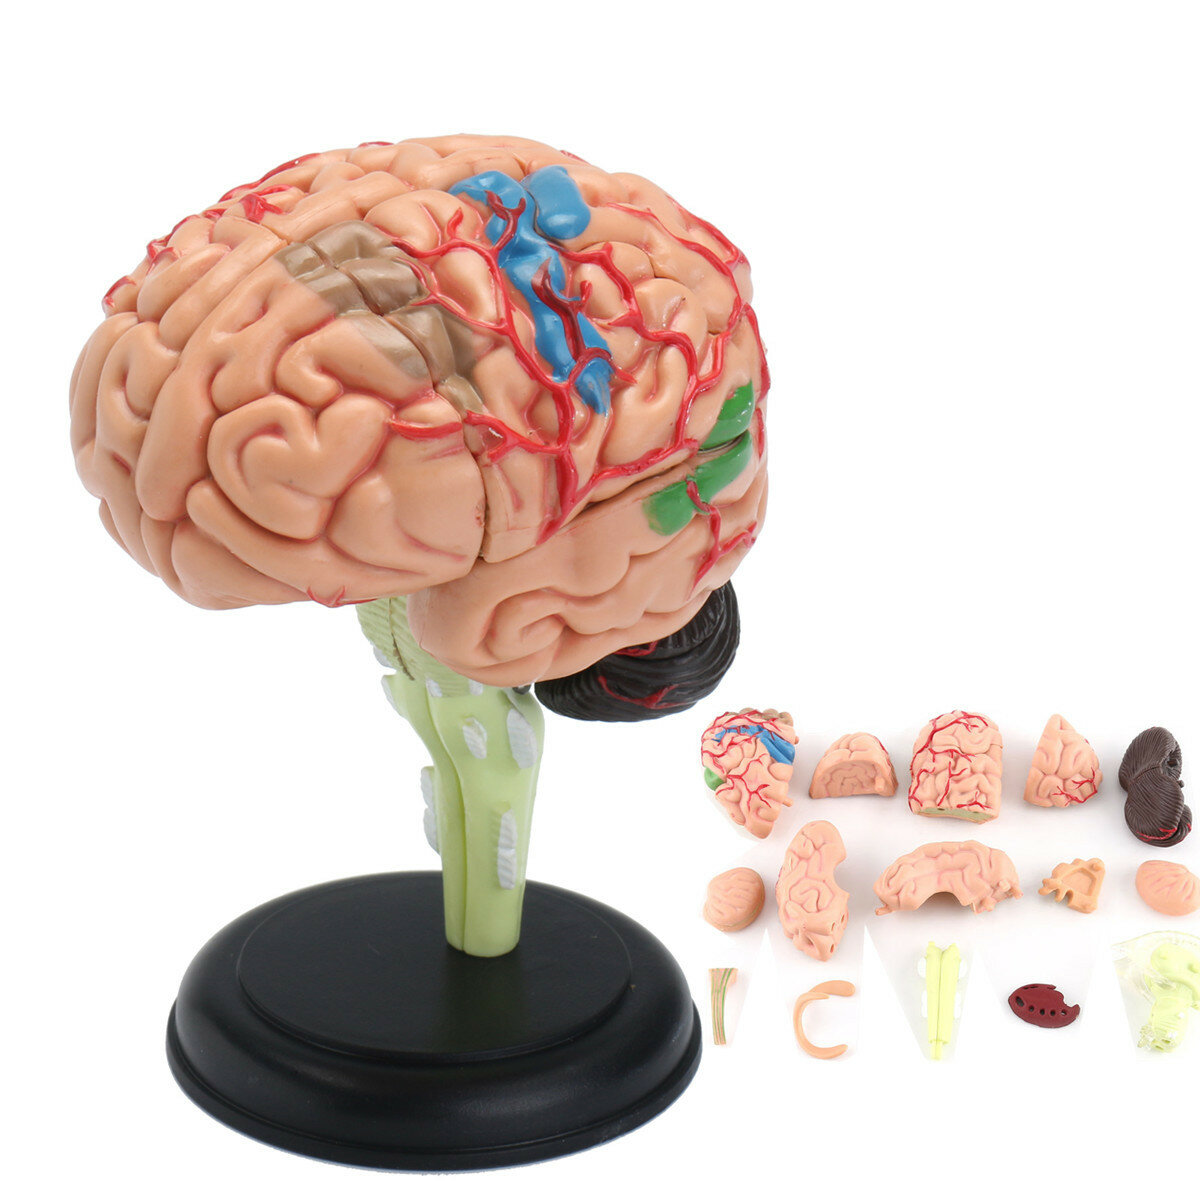 

Human Brain Medical Model 4D Disassembled Anatomical School Educational Teaching Tool